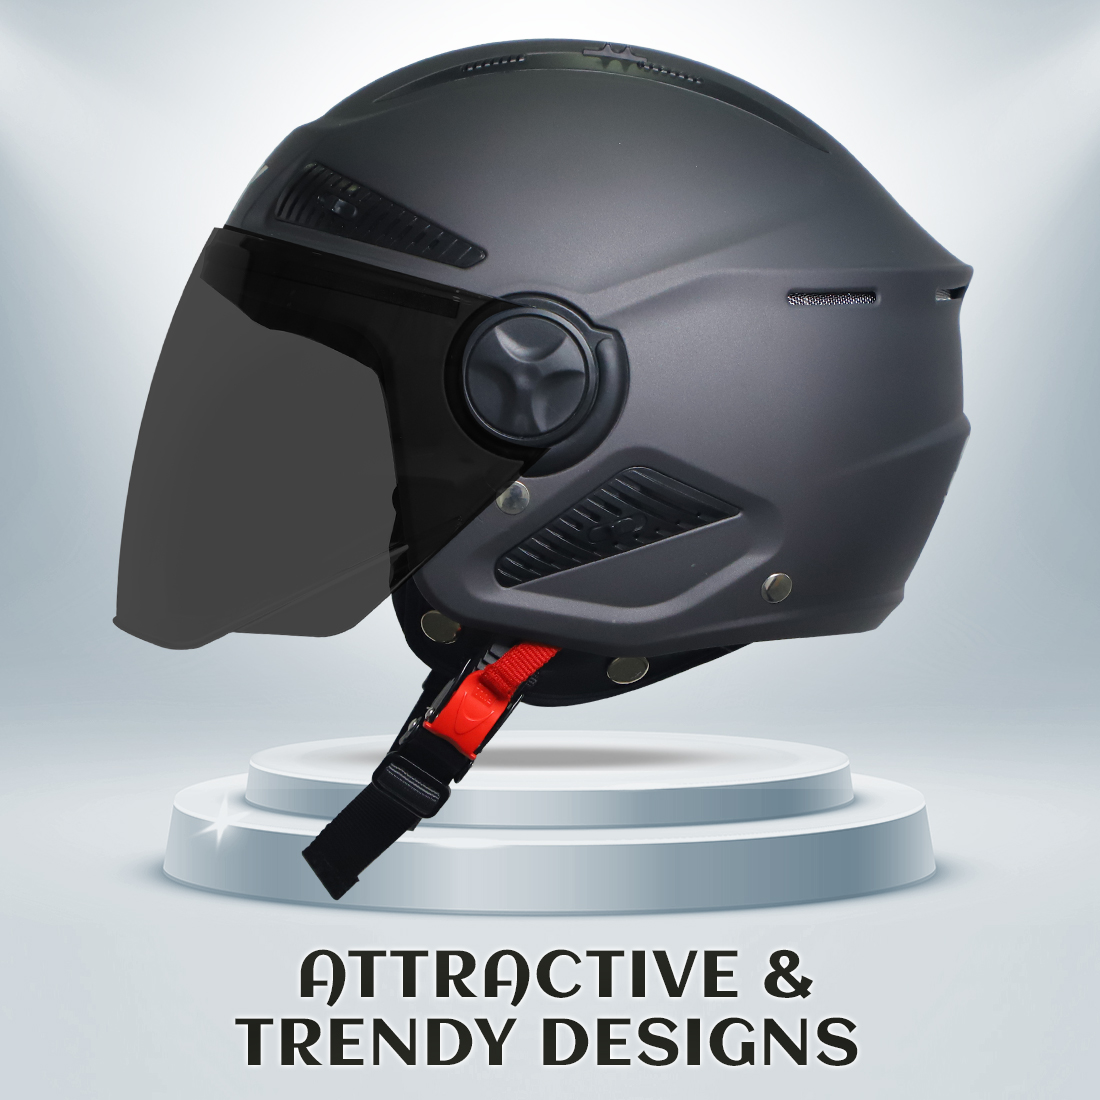 Steelbird SBH-24 Boxx ISI Certified Open Face Helmet For Men And Women (Matt H. Grey With Smoke Visor)